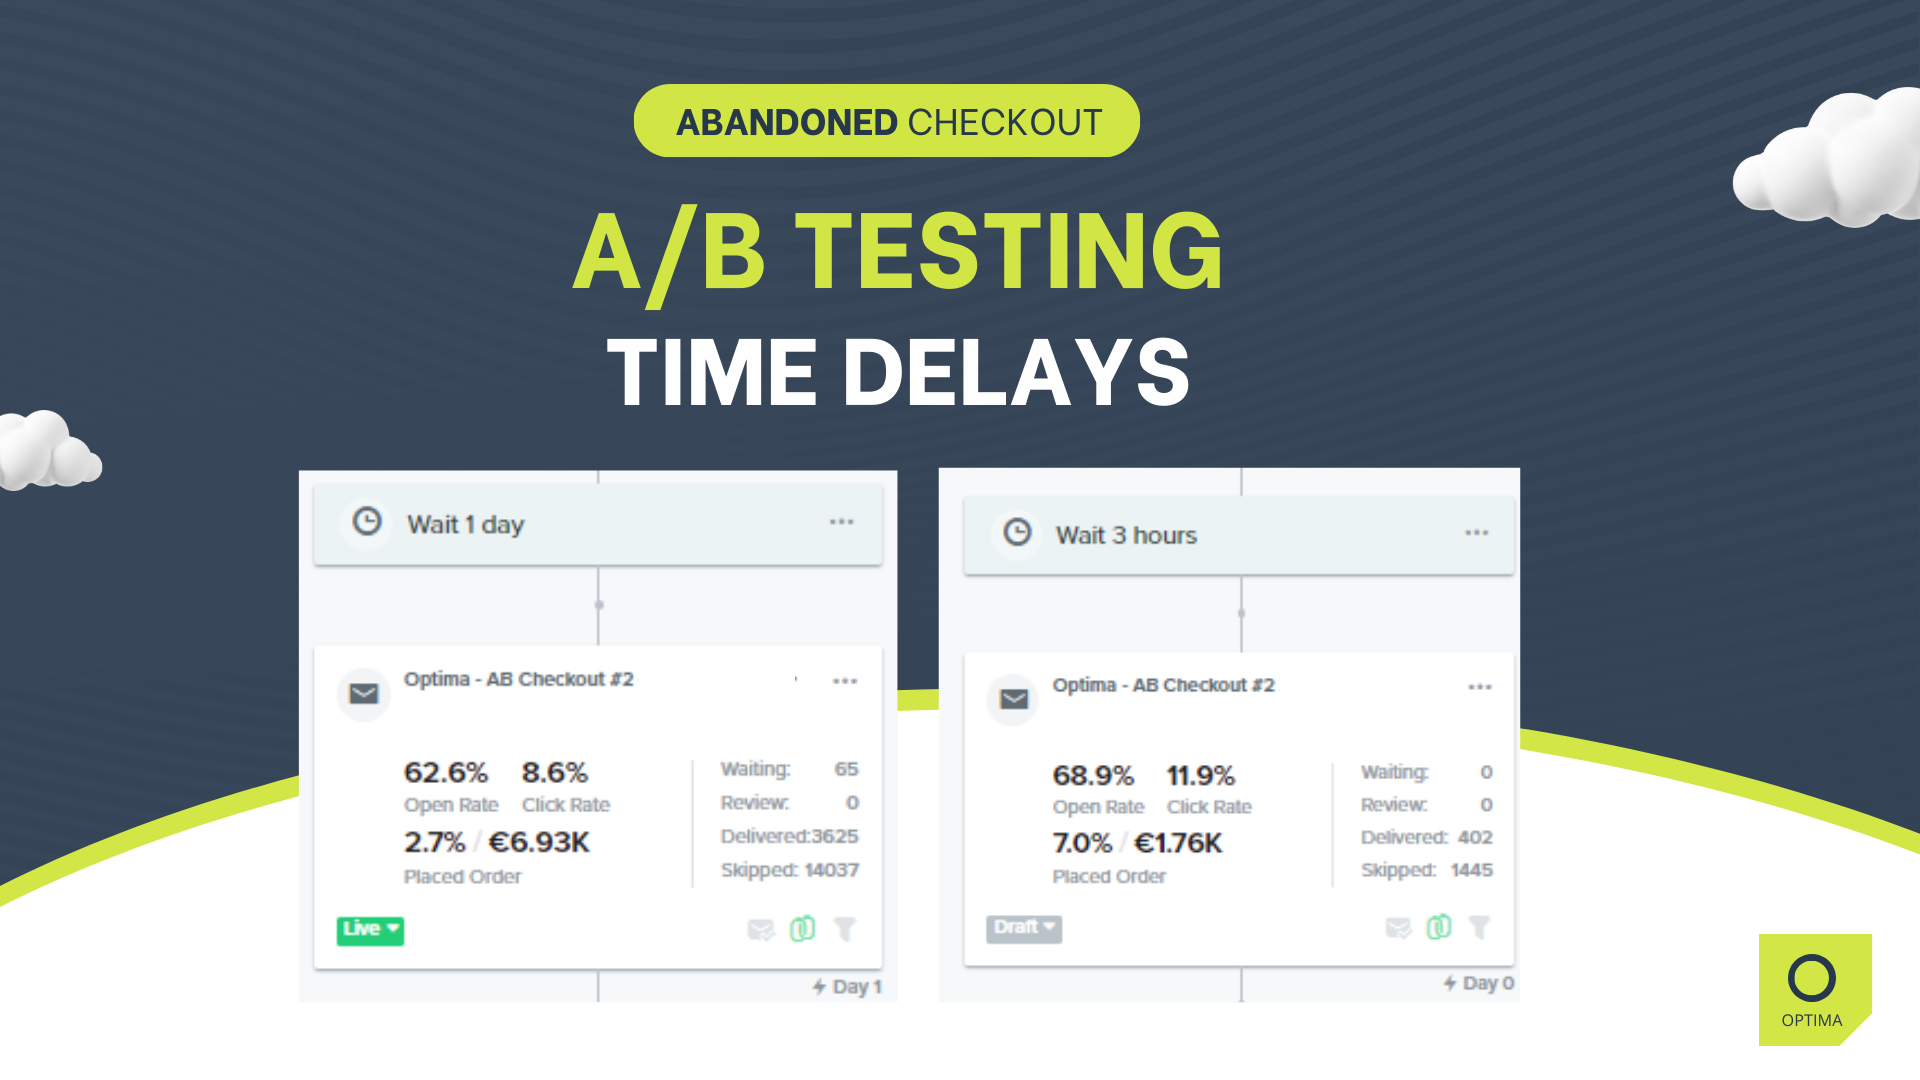 Ab testing time delays